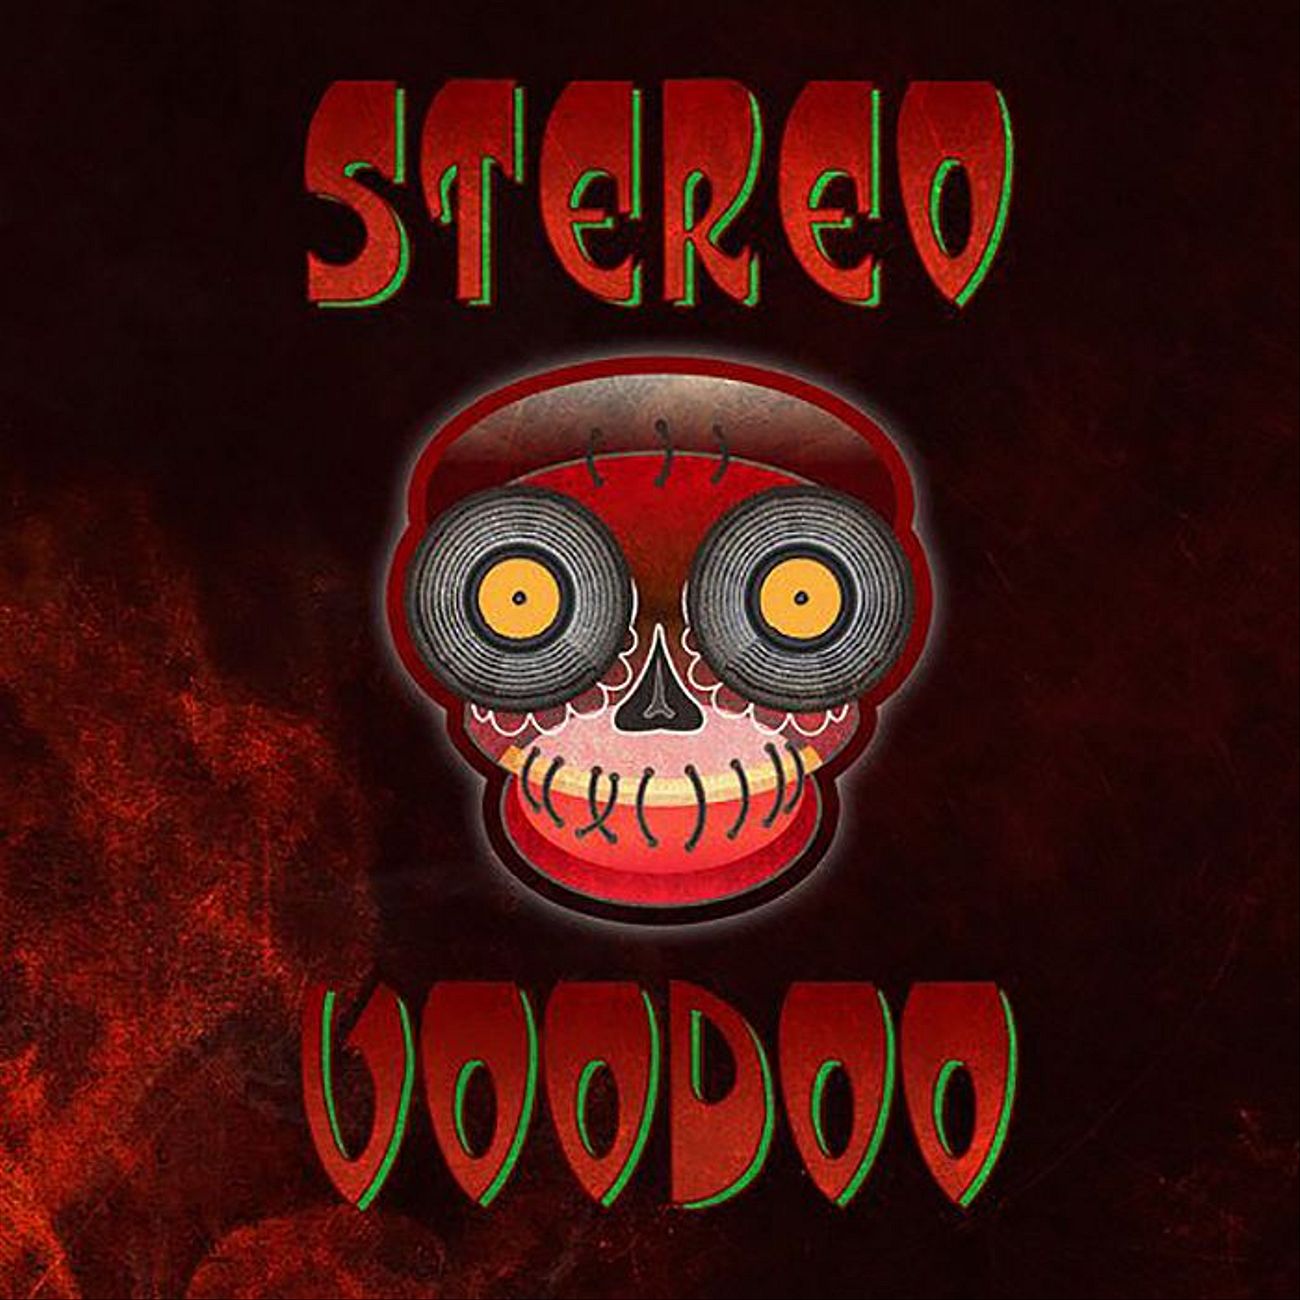 Stereo Voodoo Артемия Троицкого